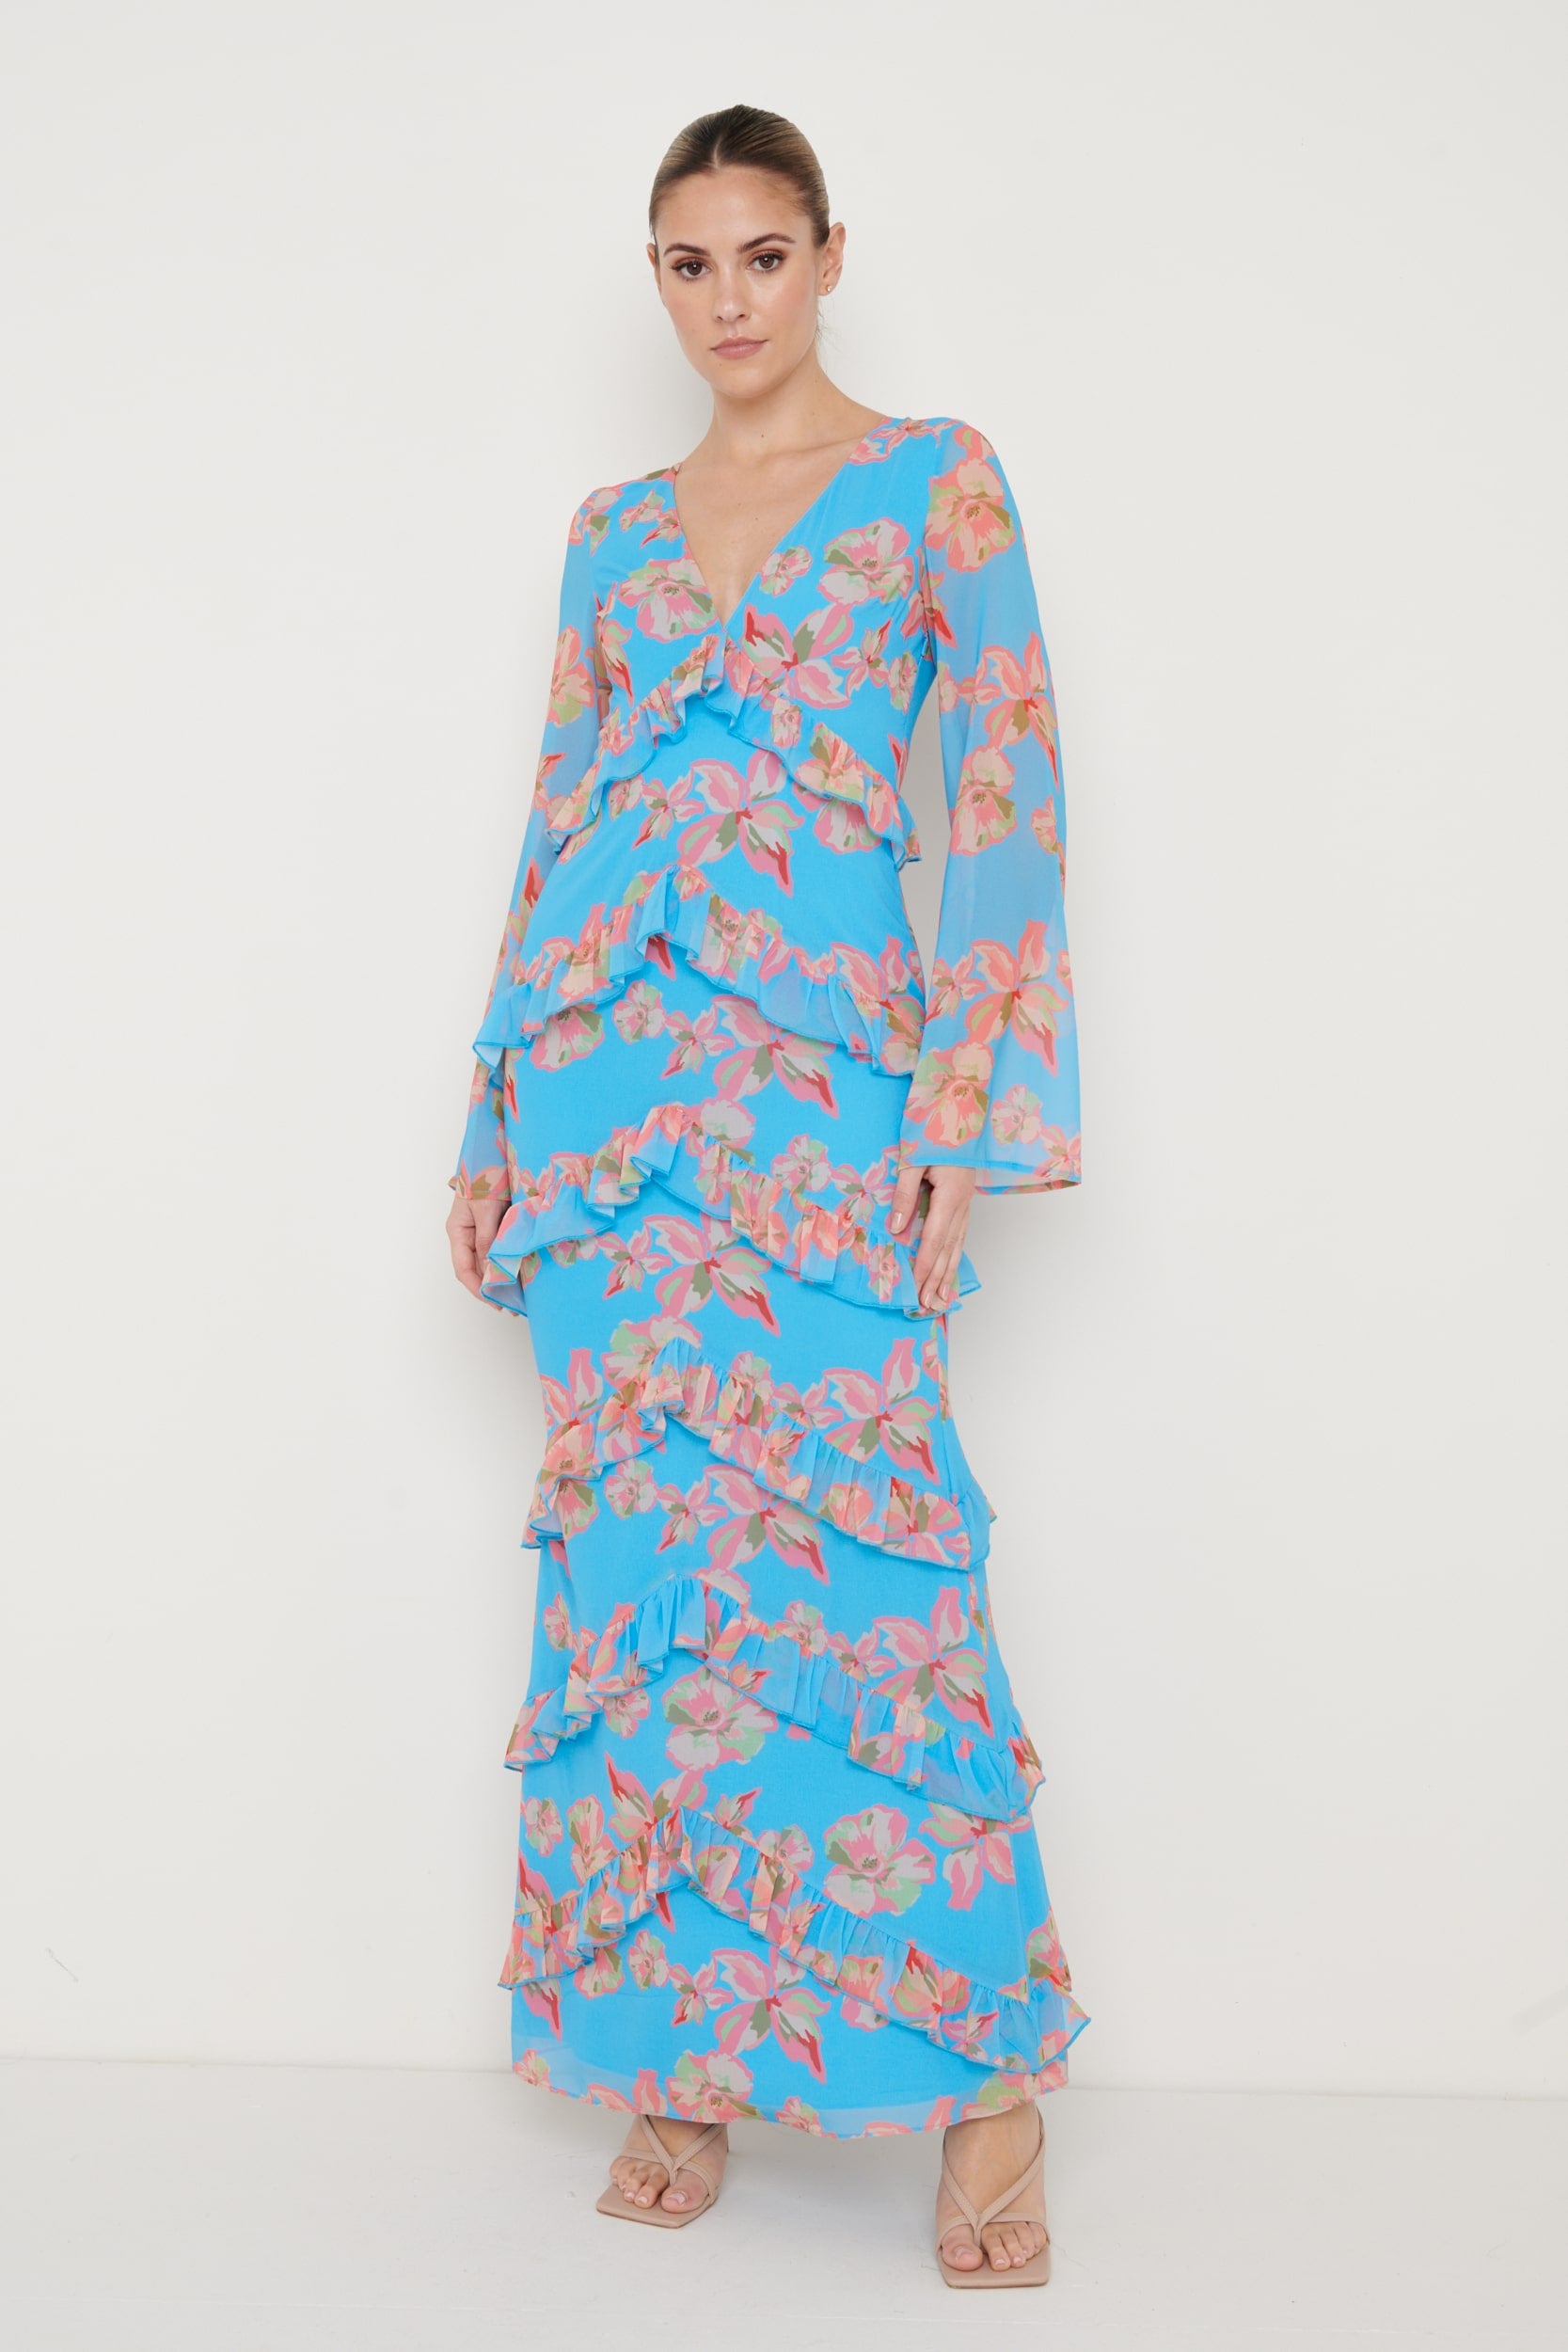 Paige Ruffle Maxi Dress - Blue Floral, 10